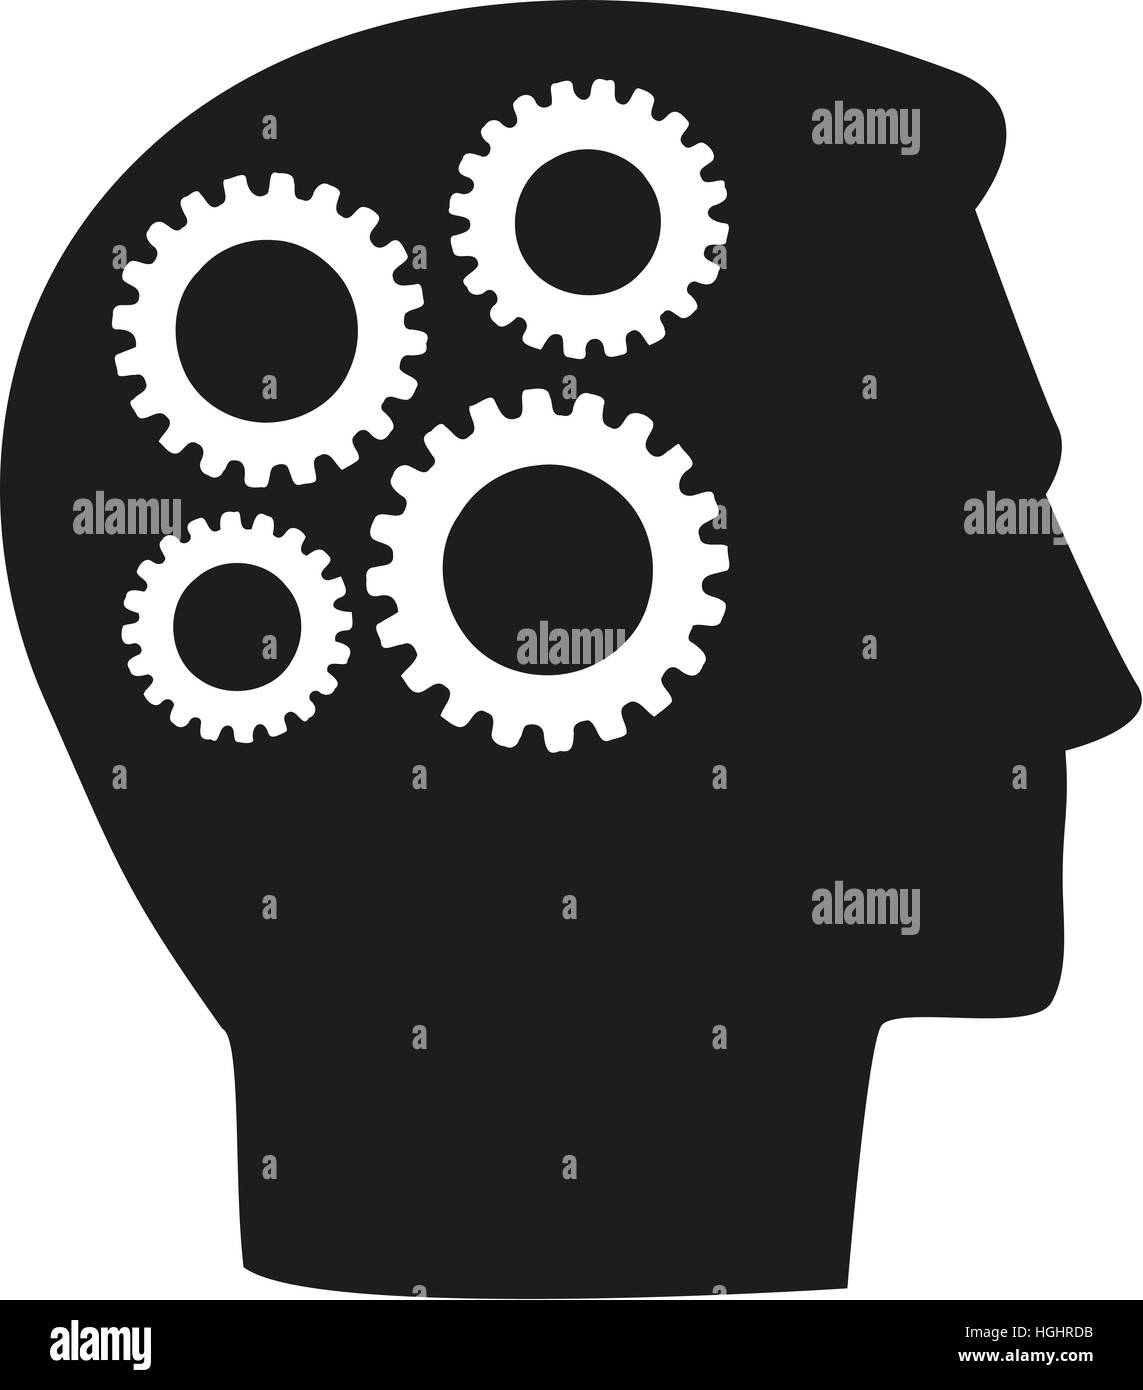 Head with gear wheels in brain Stock Photo